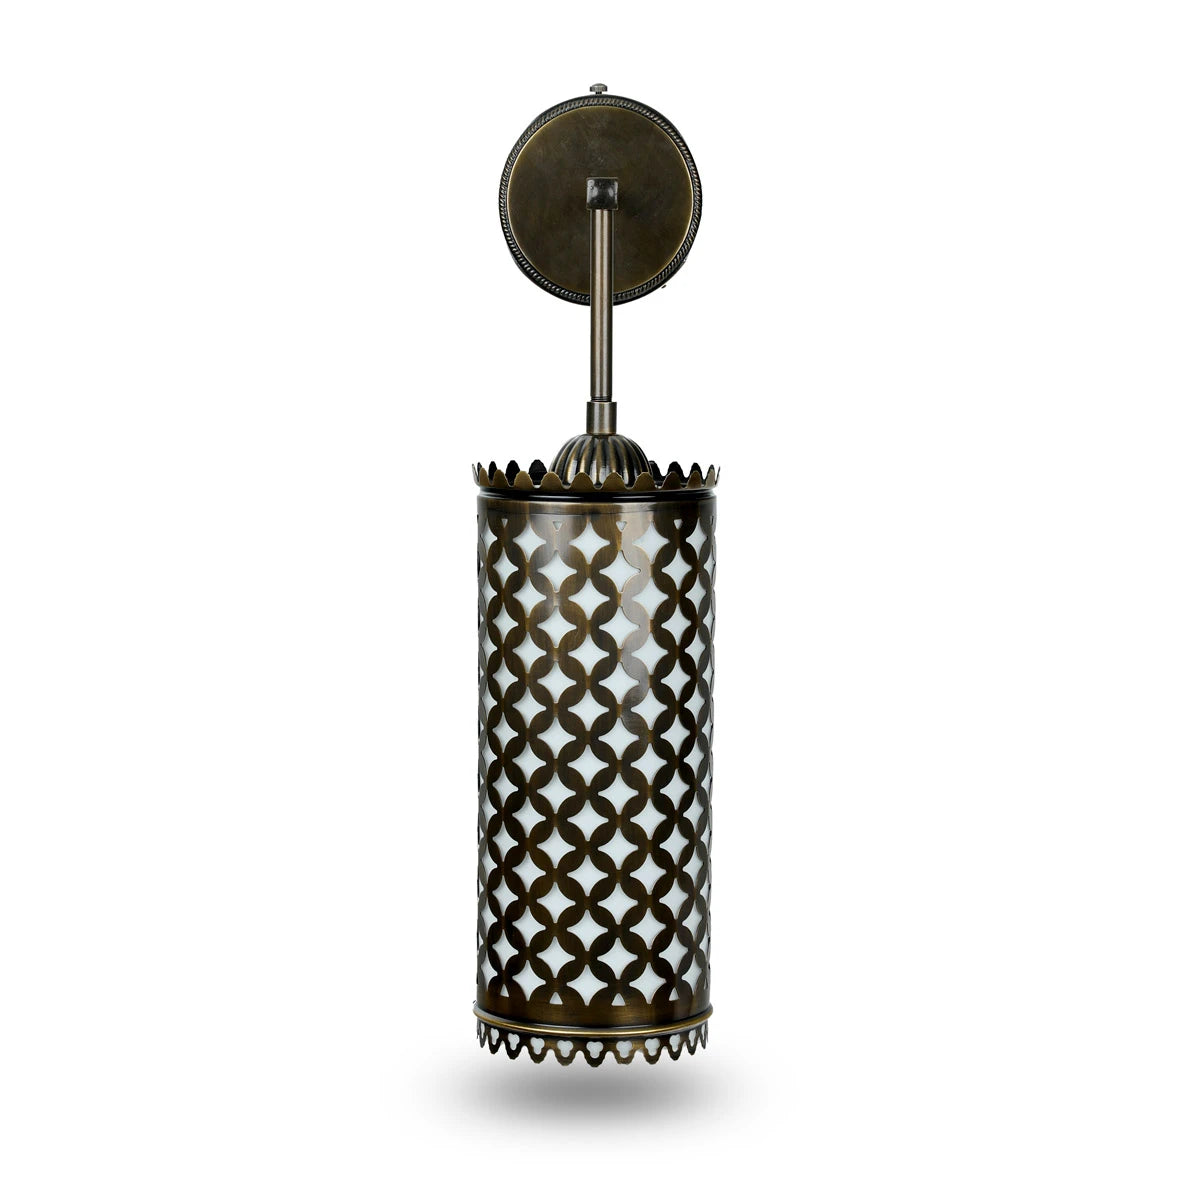 Open Cut Work Wall Bracket Lamp Made of Brass With Seamless Quilt Star Pattern